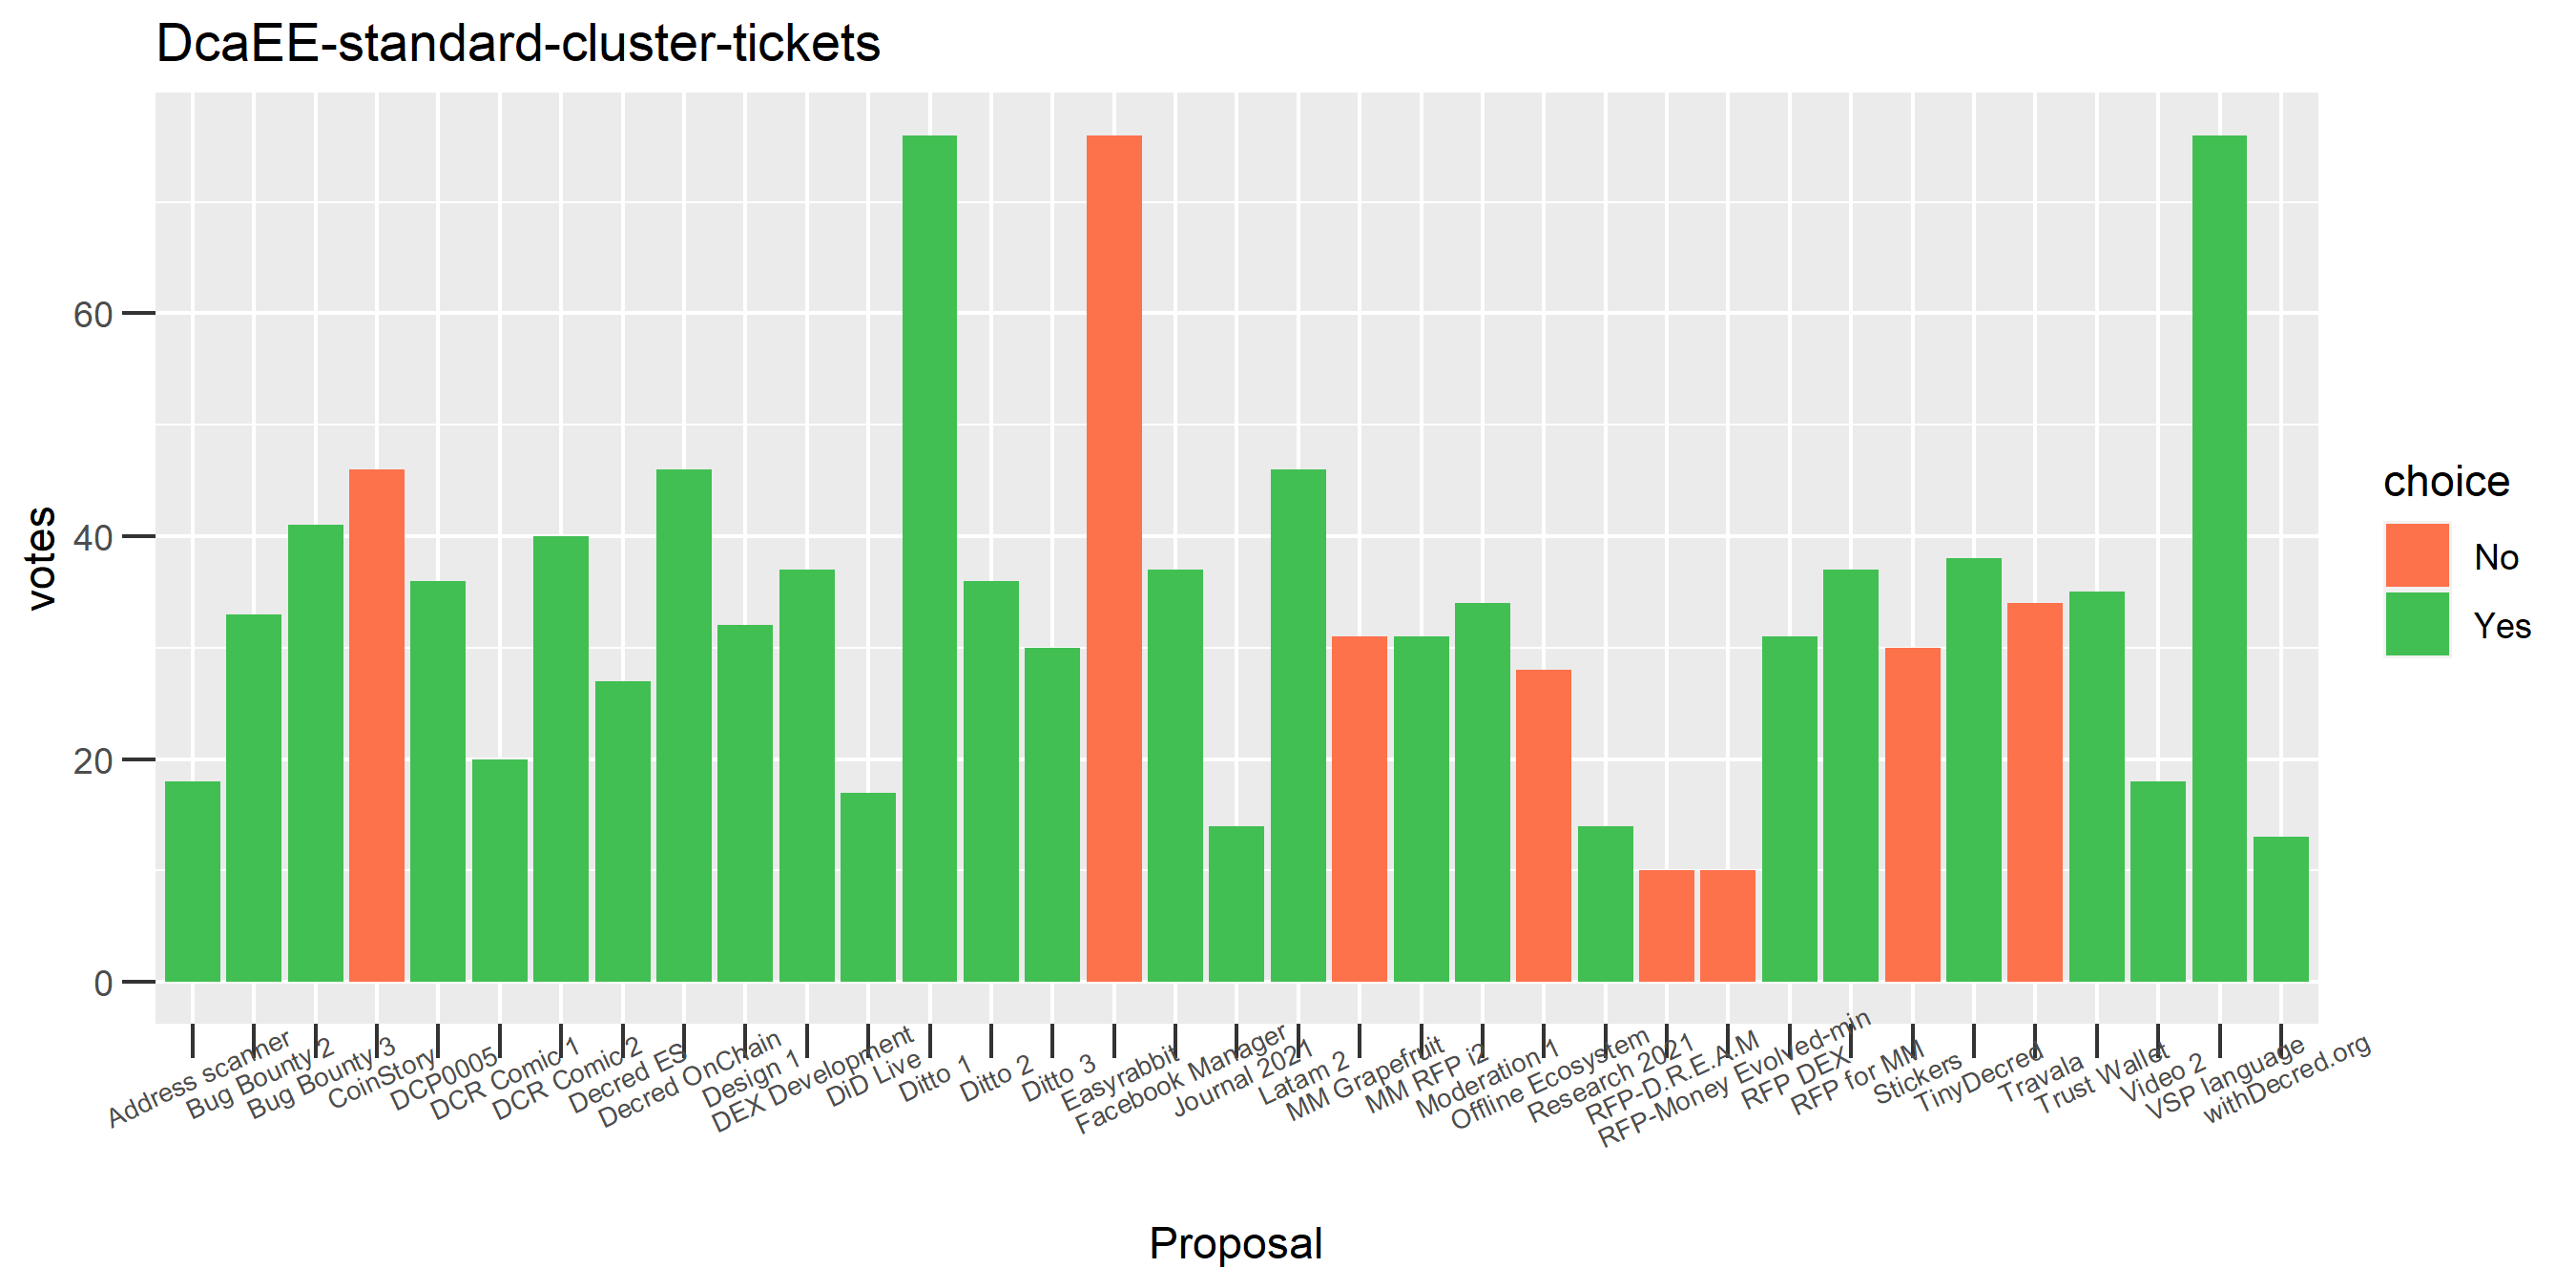 DcaEE-standard-cluster-tickets